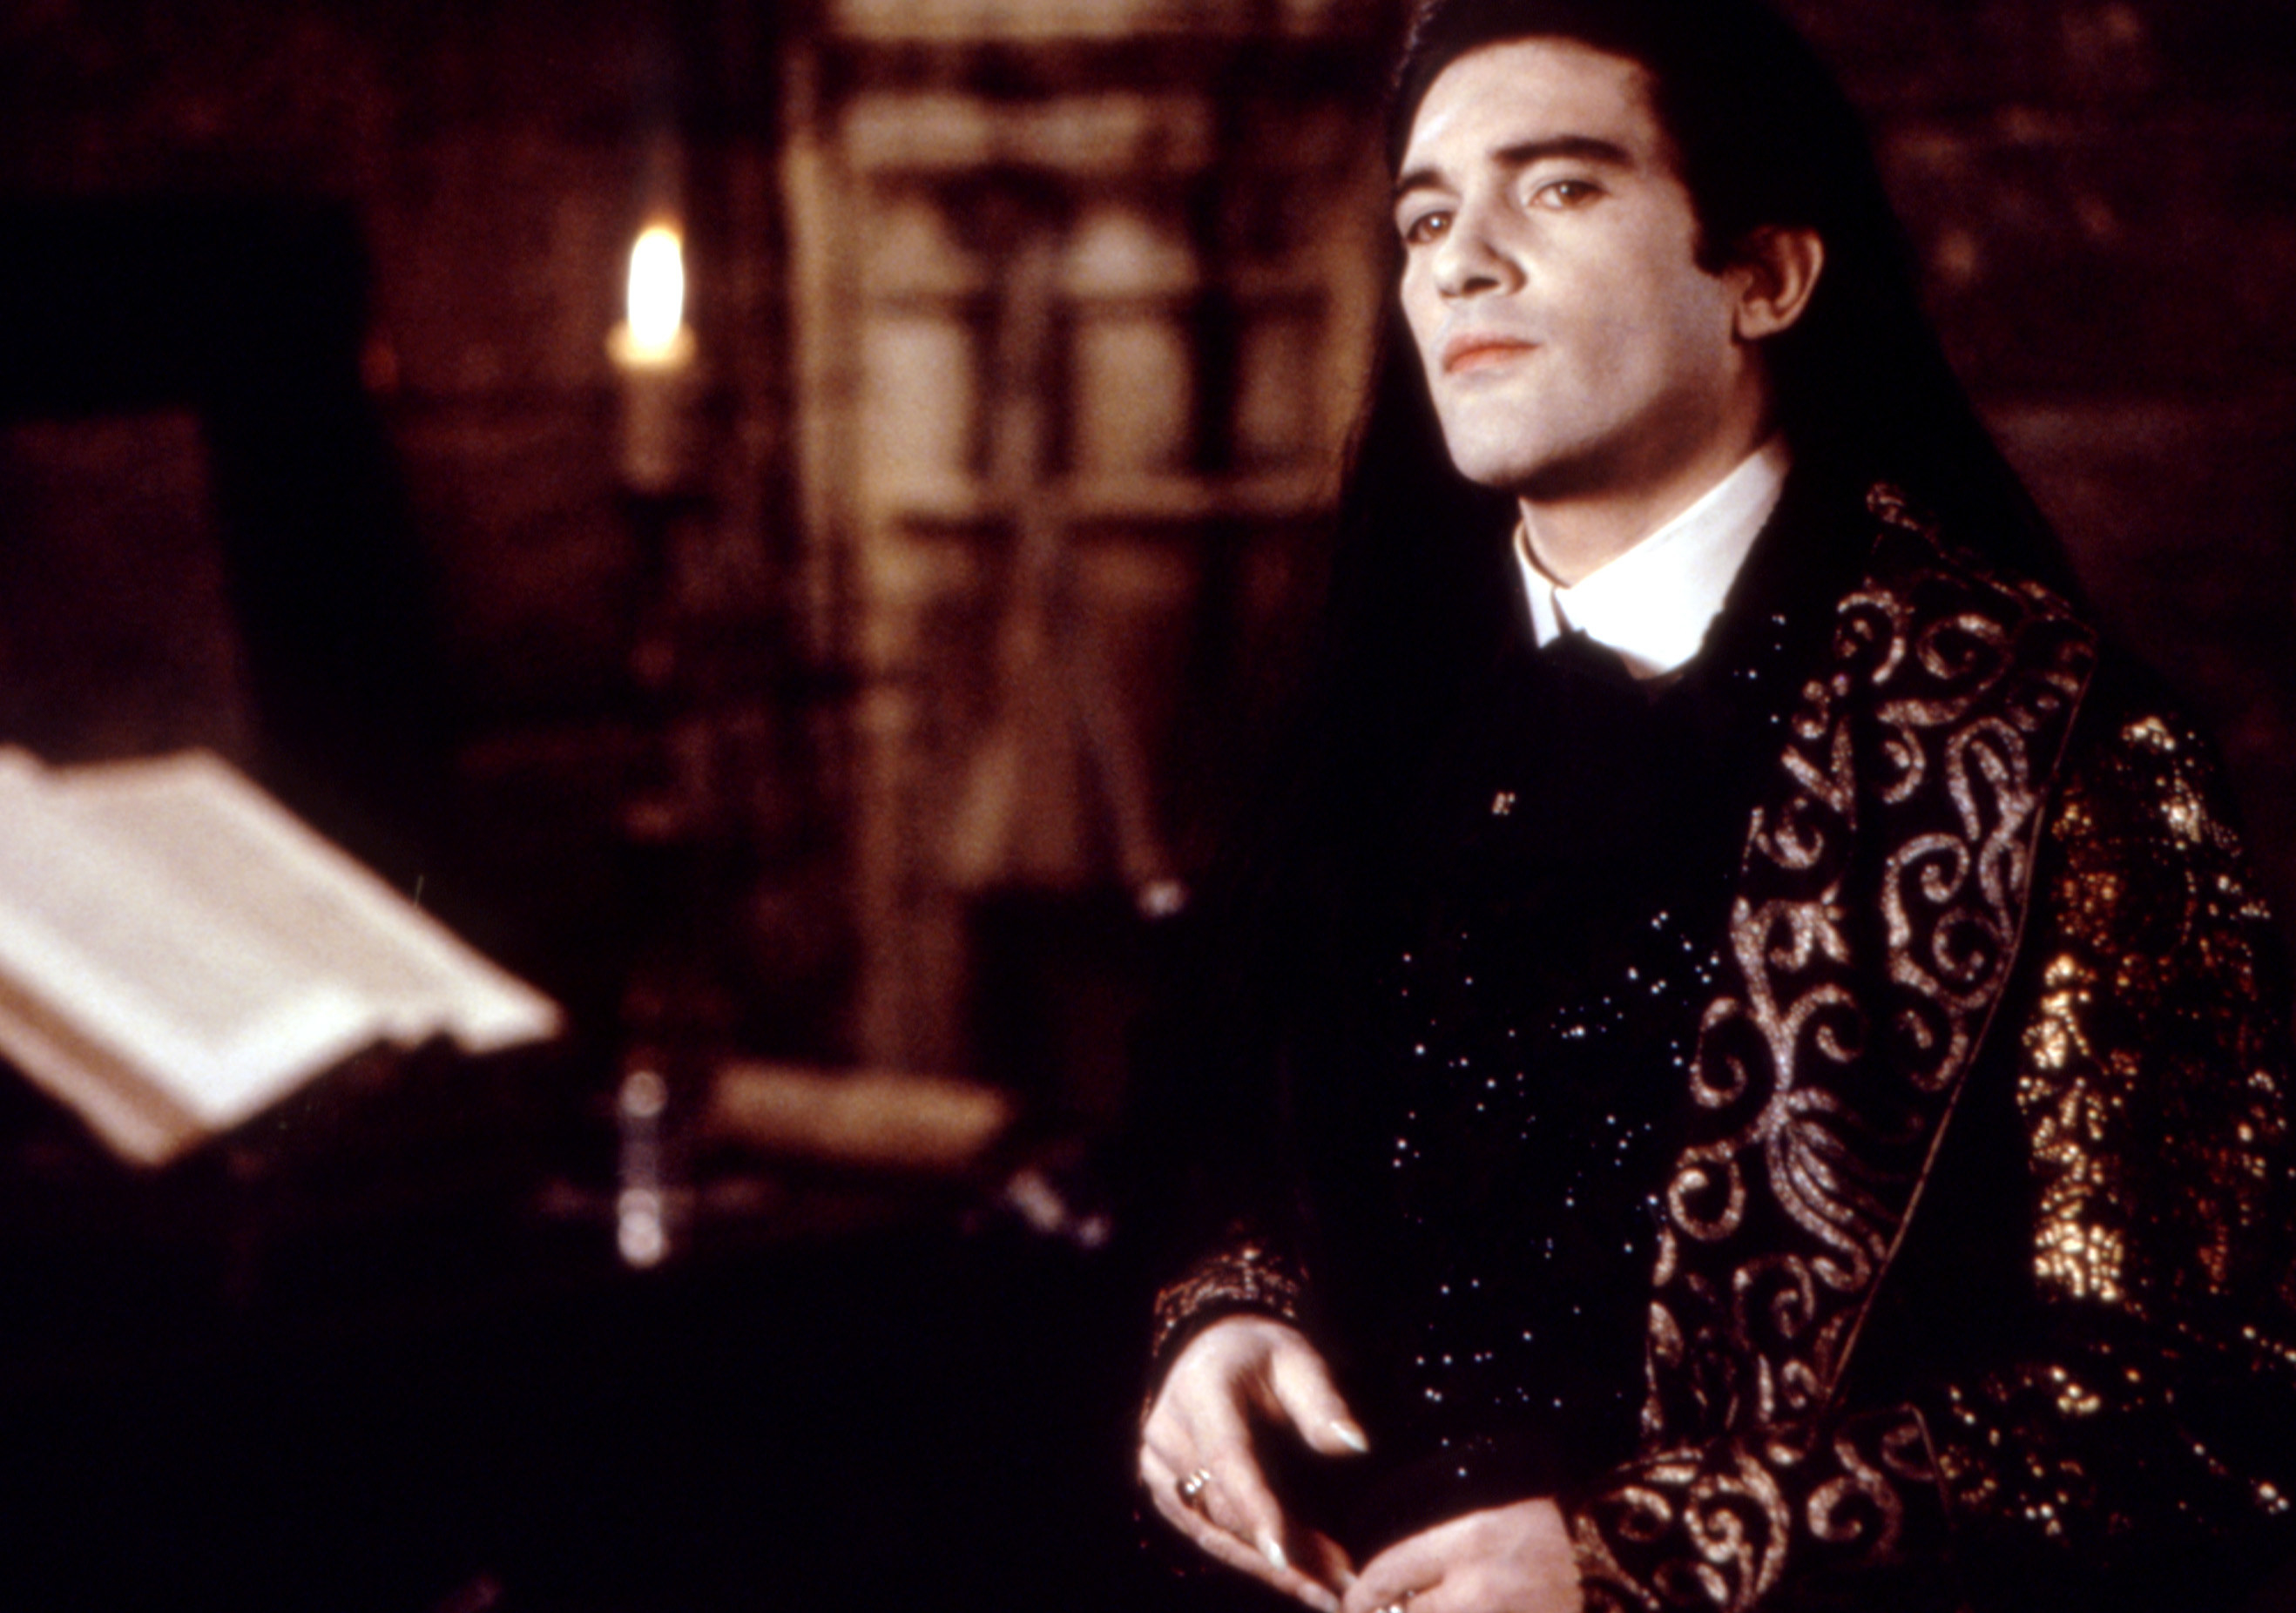 Antonio Banderas in Interview with the Vampire